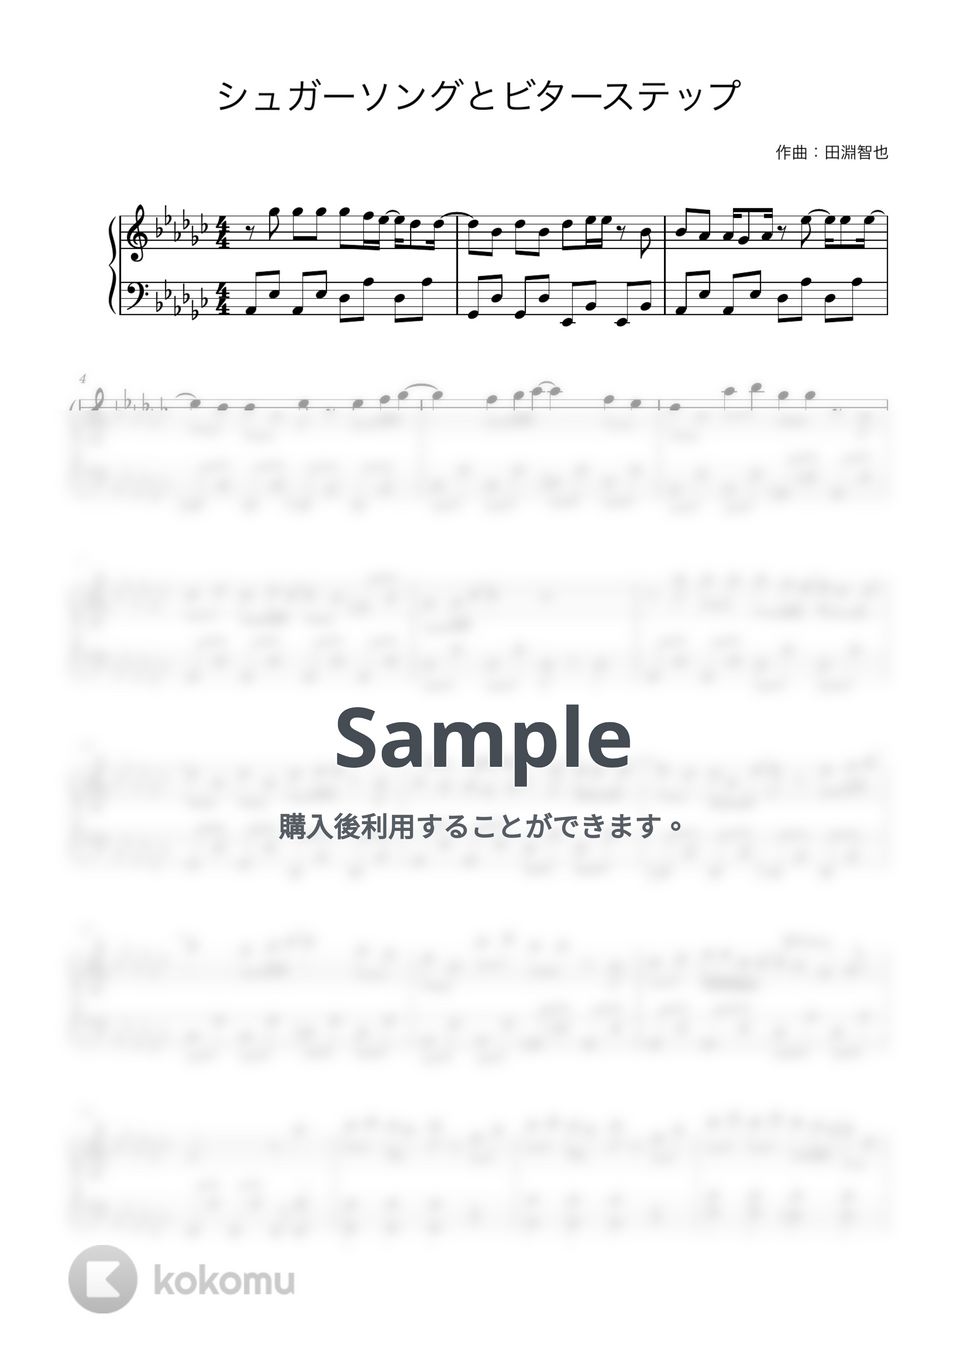 Unison Square Garden - シュガーソングとビターステップ (血界戦線 / ピアノ初心者向け) by Piano Lovers. jp